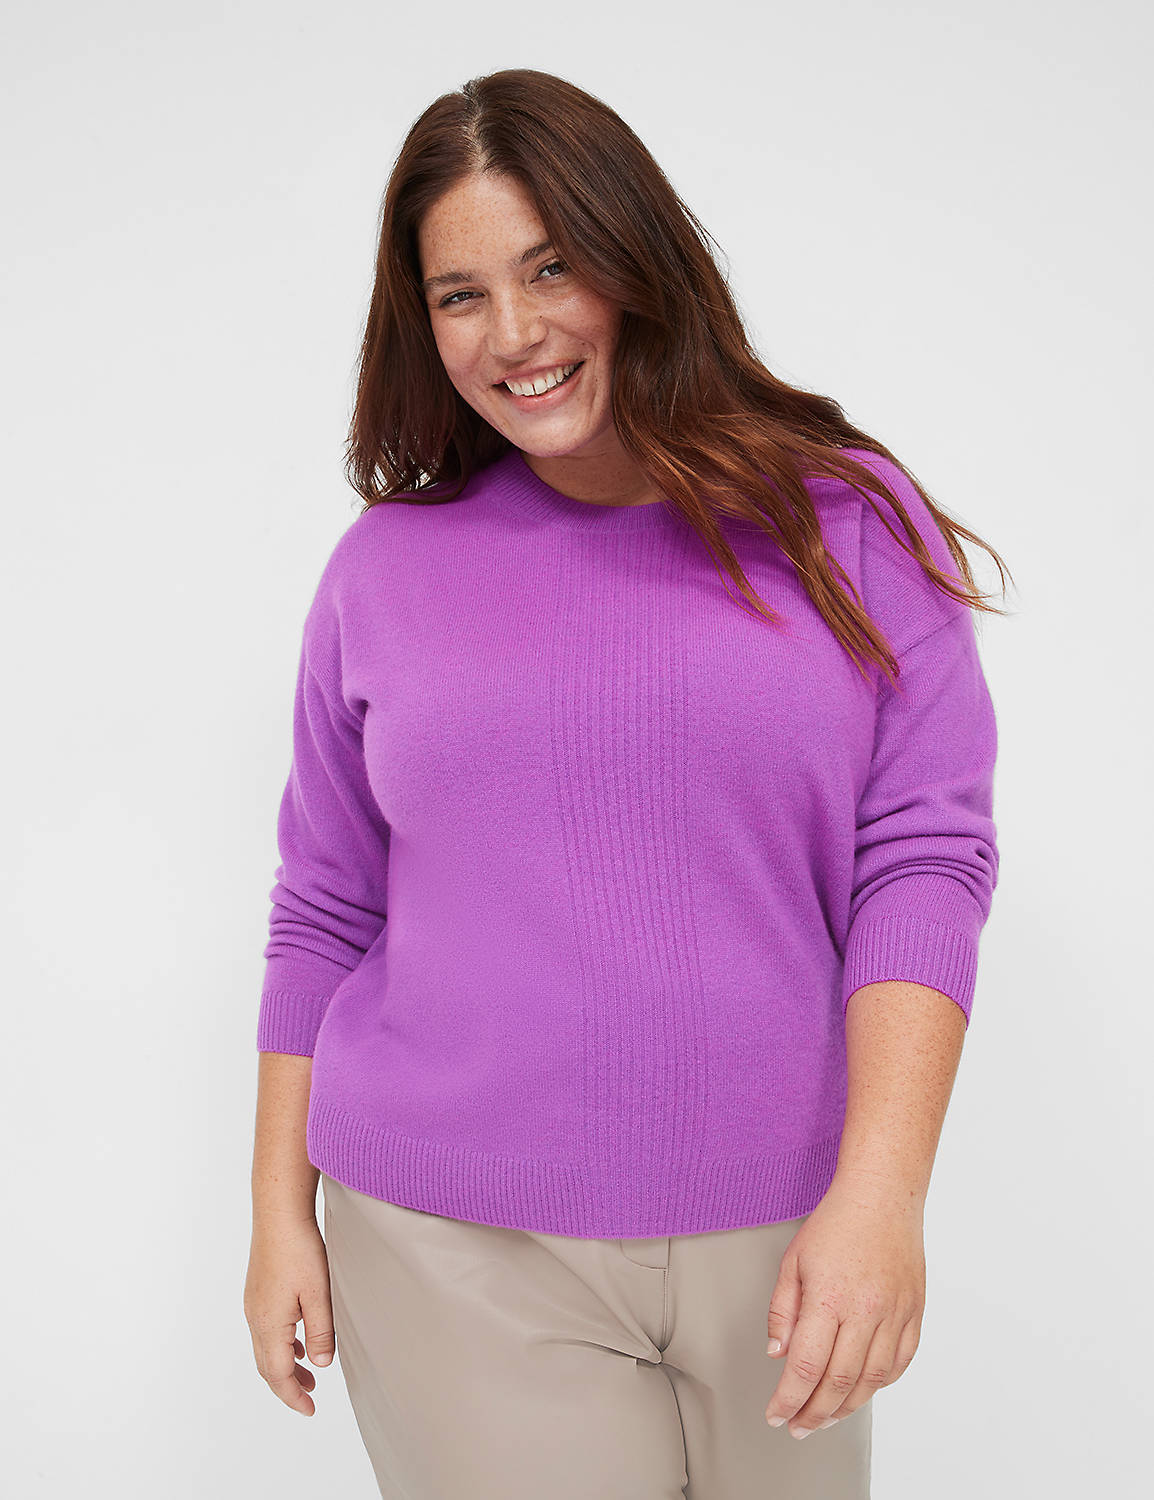 lane bryant long-sleeve cashmere sweater 22/24 purple cactus flower